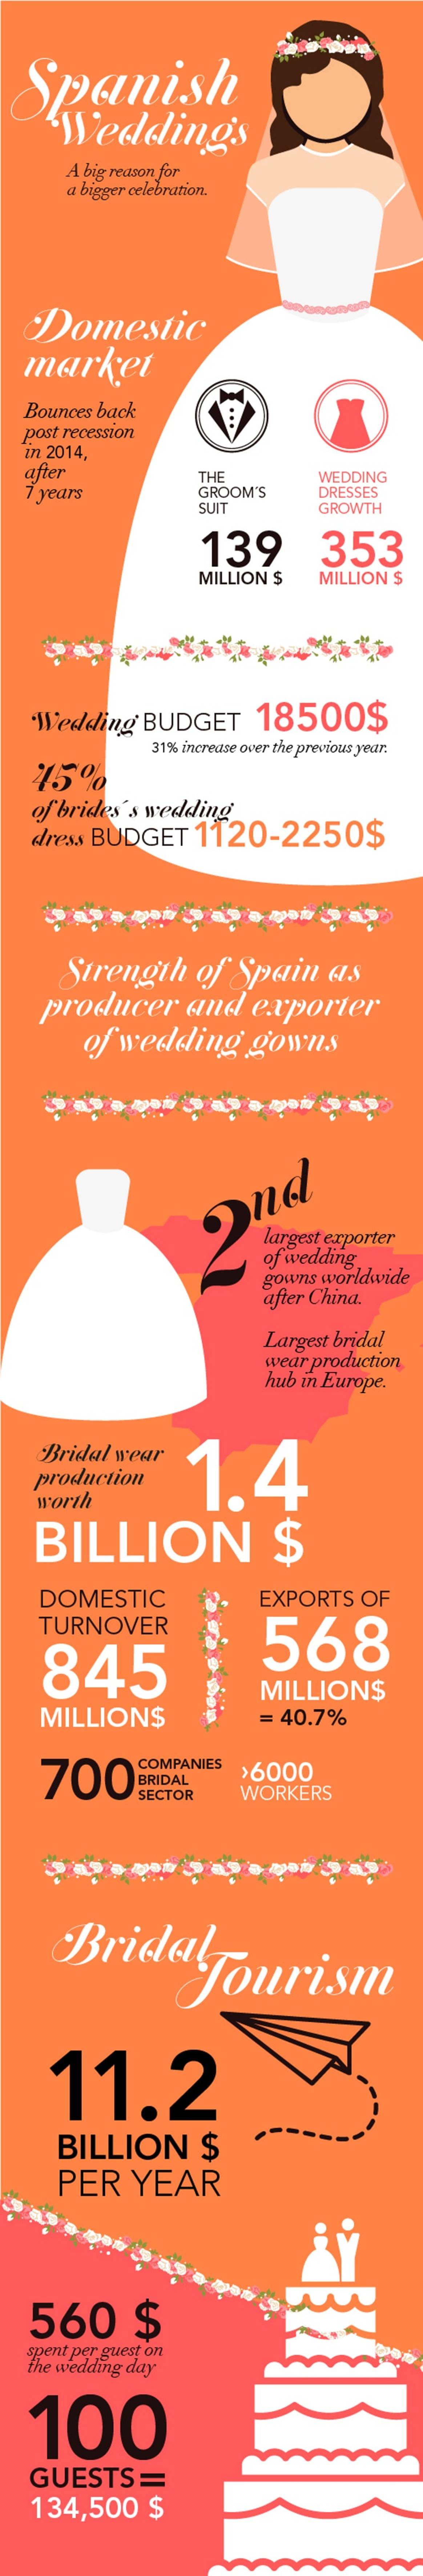 Spain - The wedding destination choice of brides across the globe